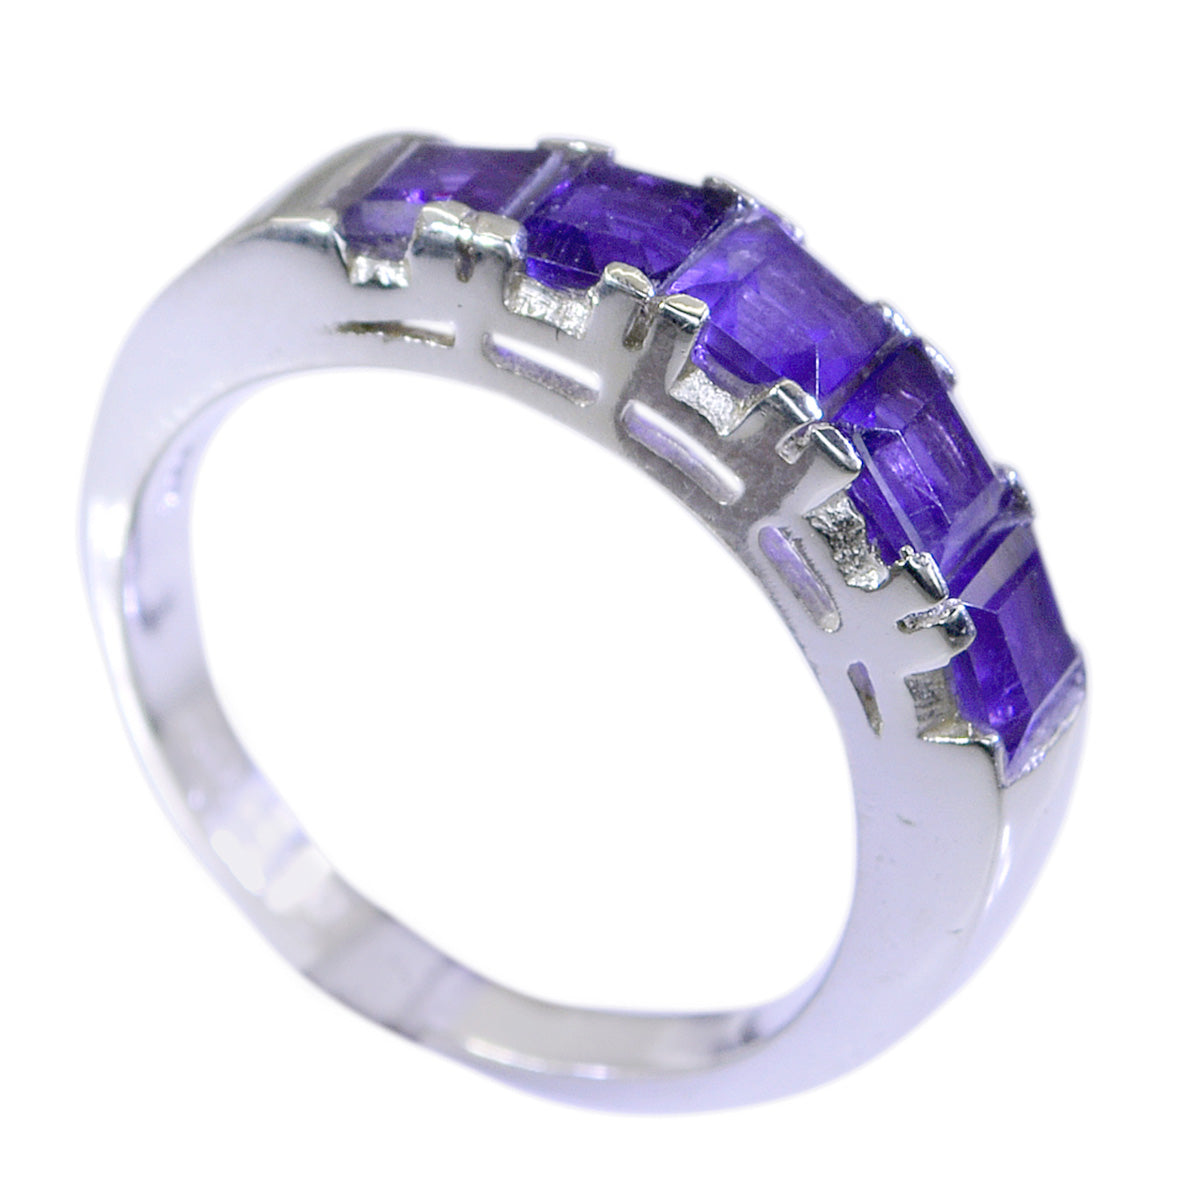 Riyo Dollish Gems Amethyst Sterling Silver Ring Cyber Monday Gift